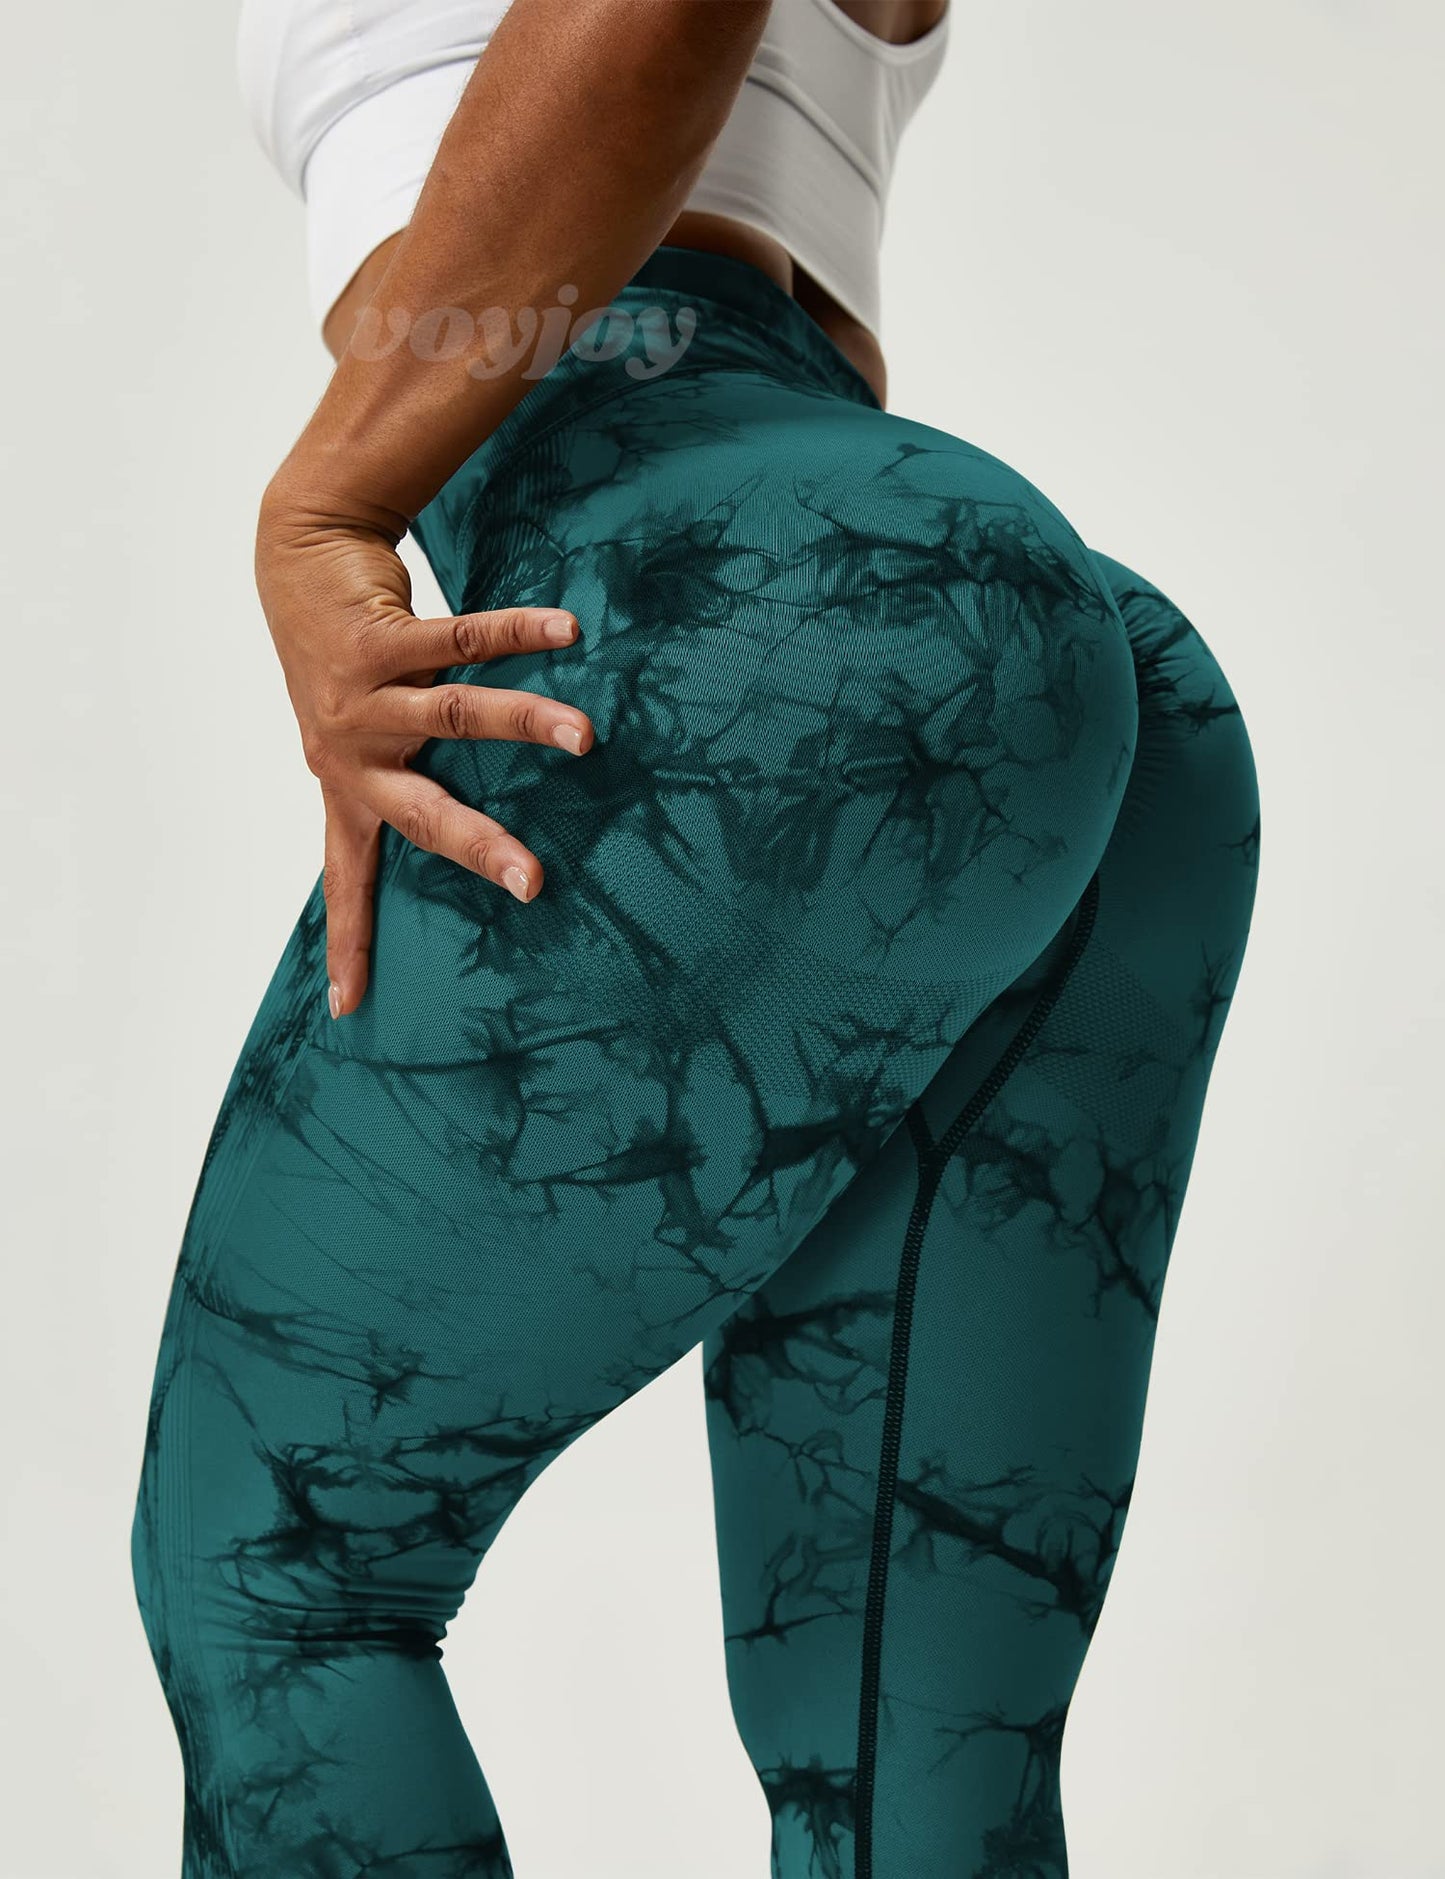 VOYJOY Tie Dye Seamless Leggings for Women High Waist Yoga Pants, Scrunch Butt Lifting Elastic Tights Blue Green